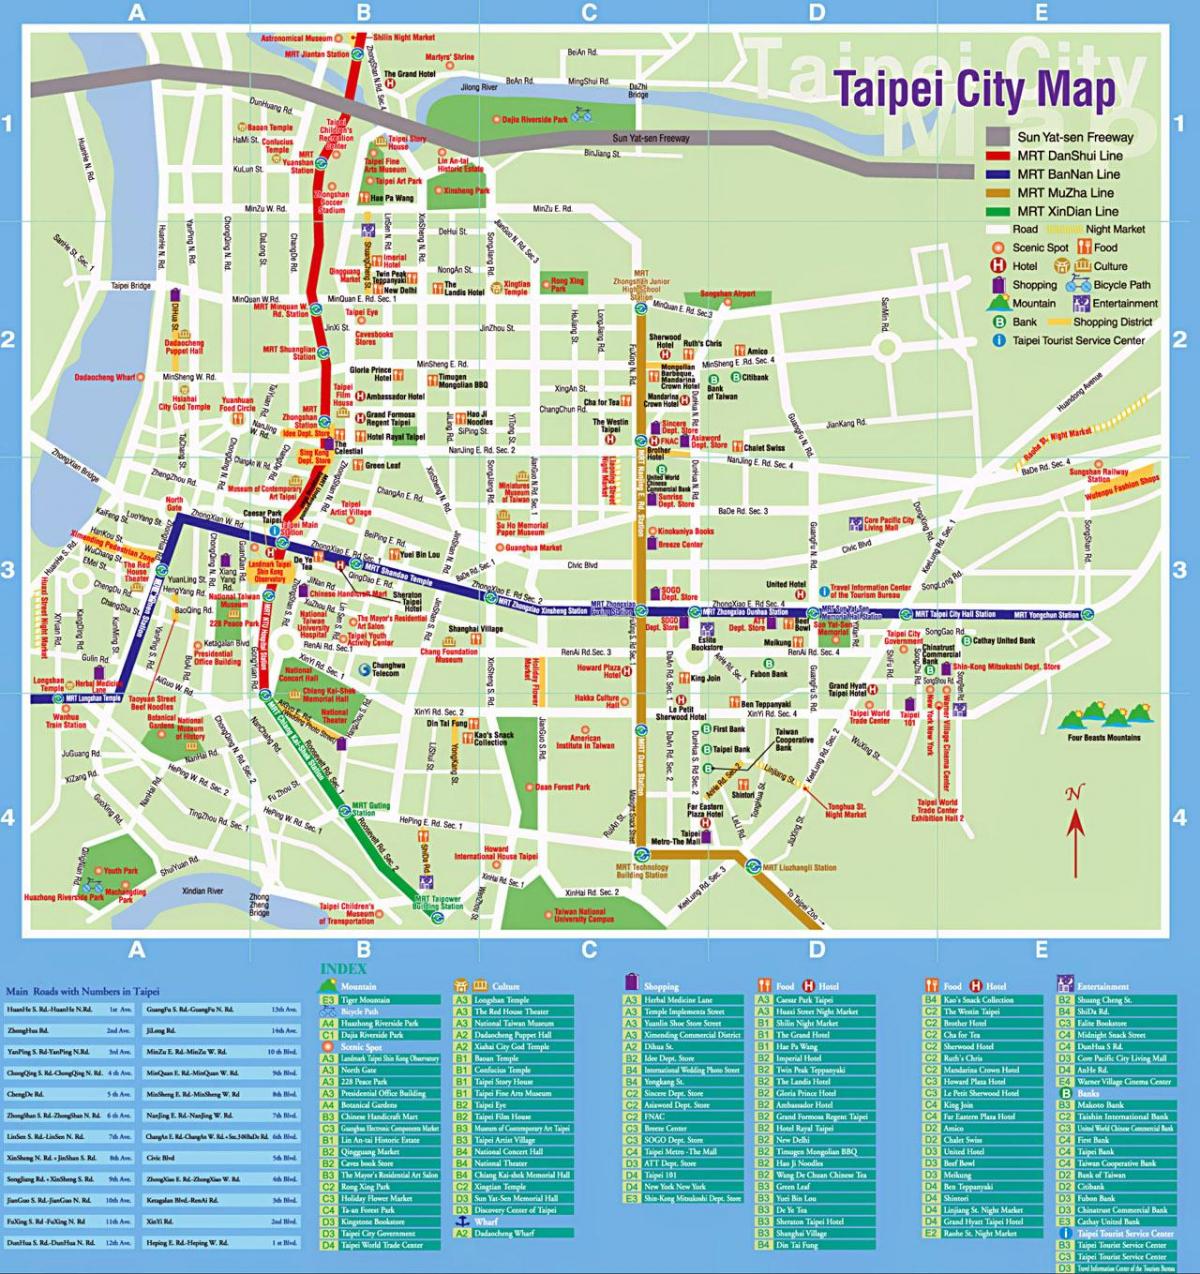 Taipei na tourist spot sa mapa